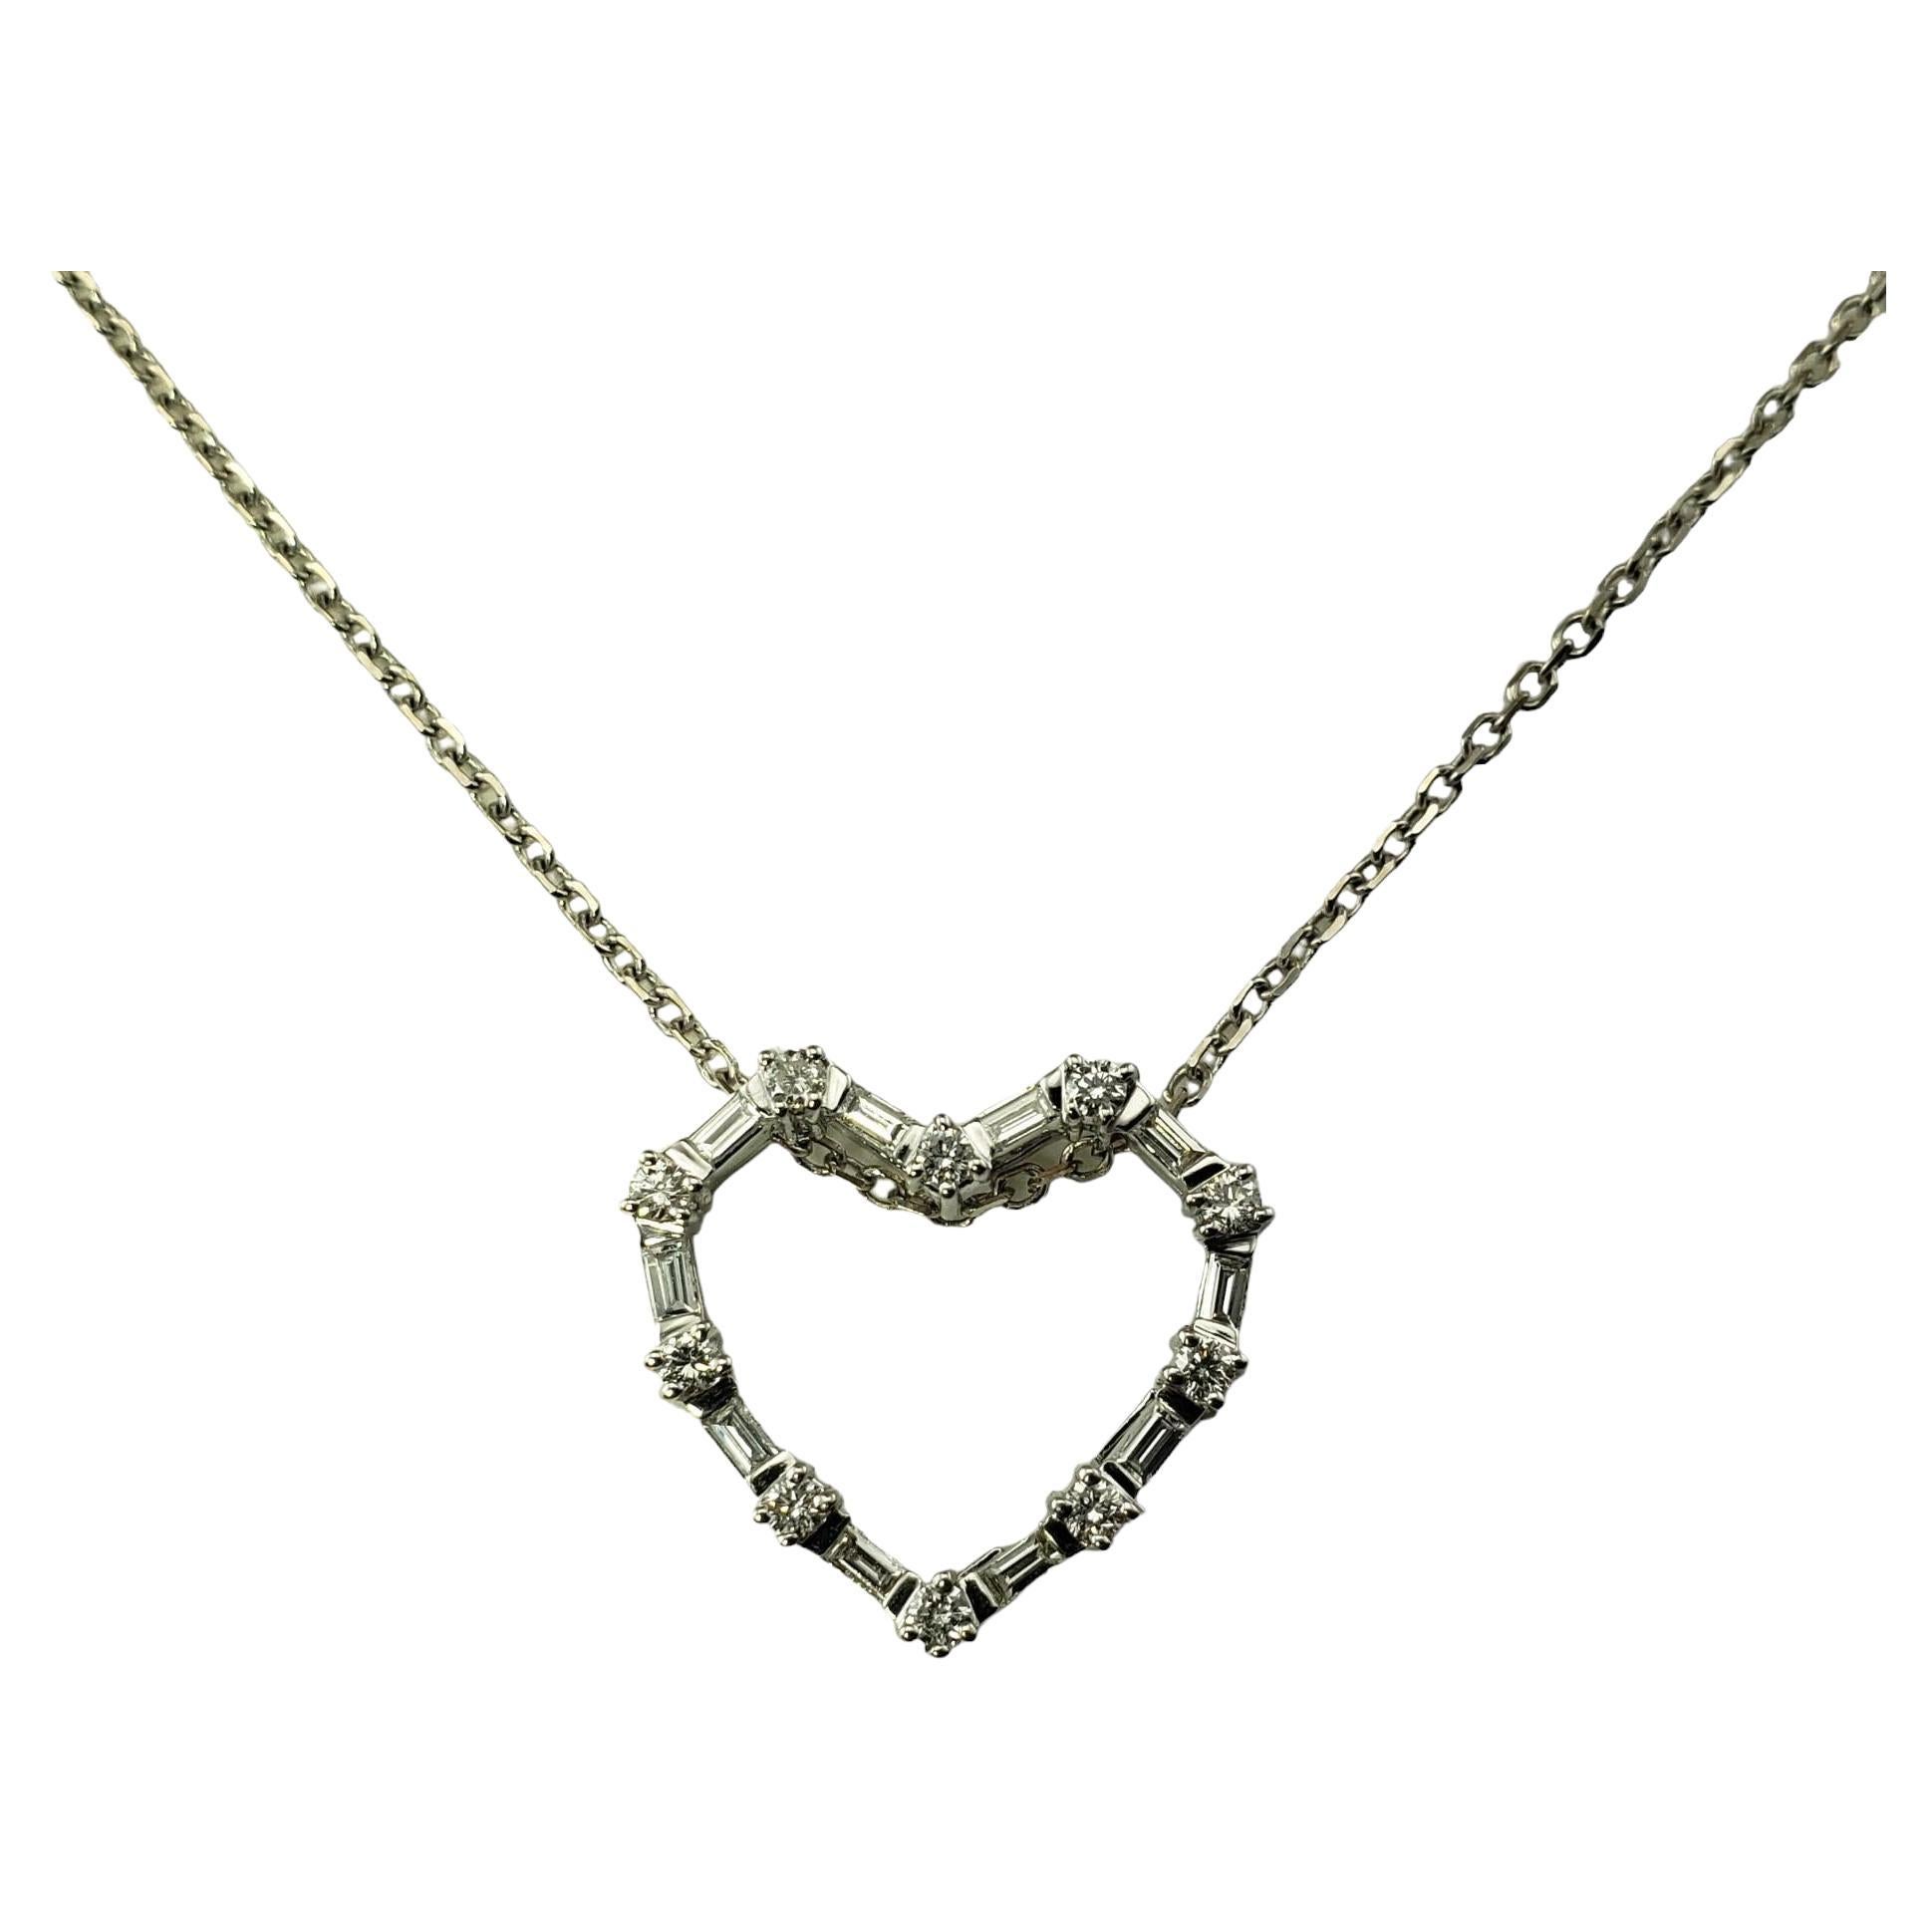  14/18 Karat White Gold Diamond Heart Pendant Necklace #15574 For Sale